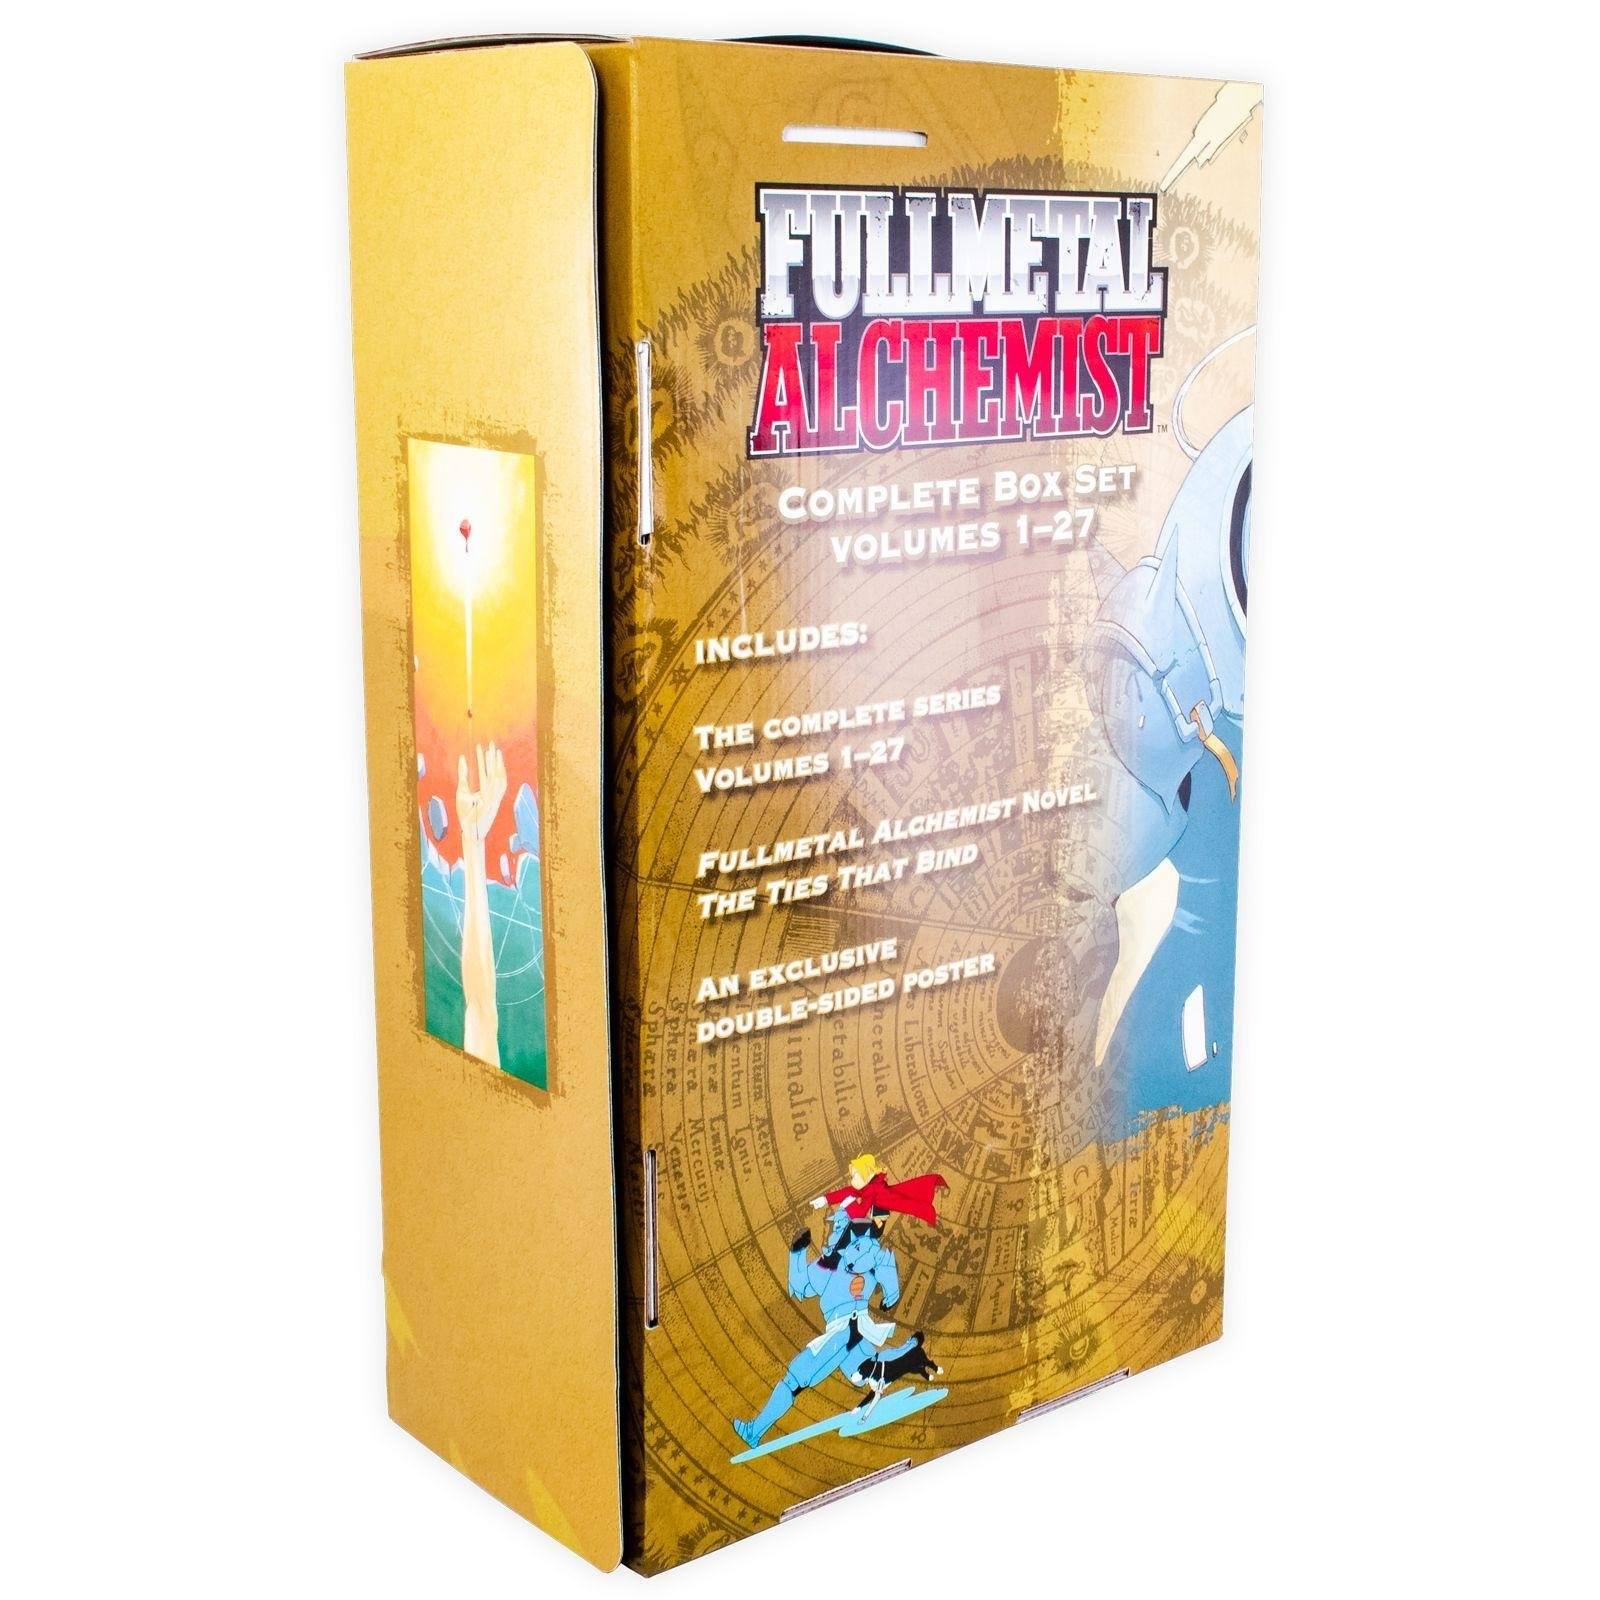 Fullmetal Alchemist - Volumes 1-27 by Hiromu Arakawa - Manga - Paperback